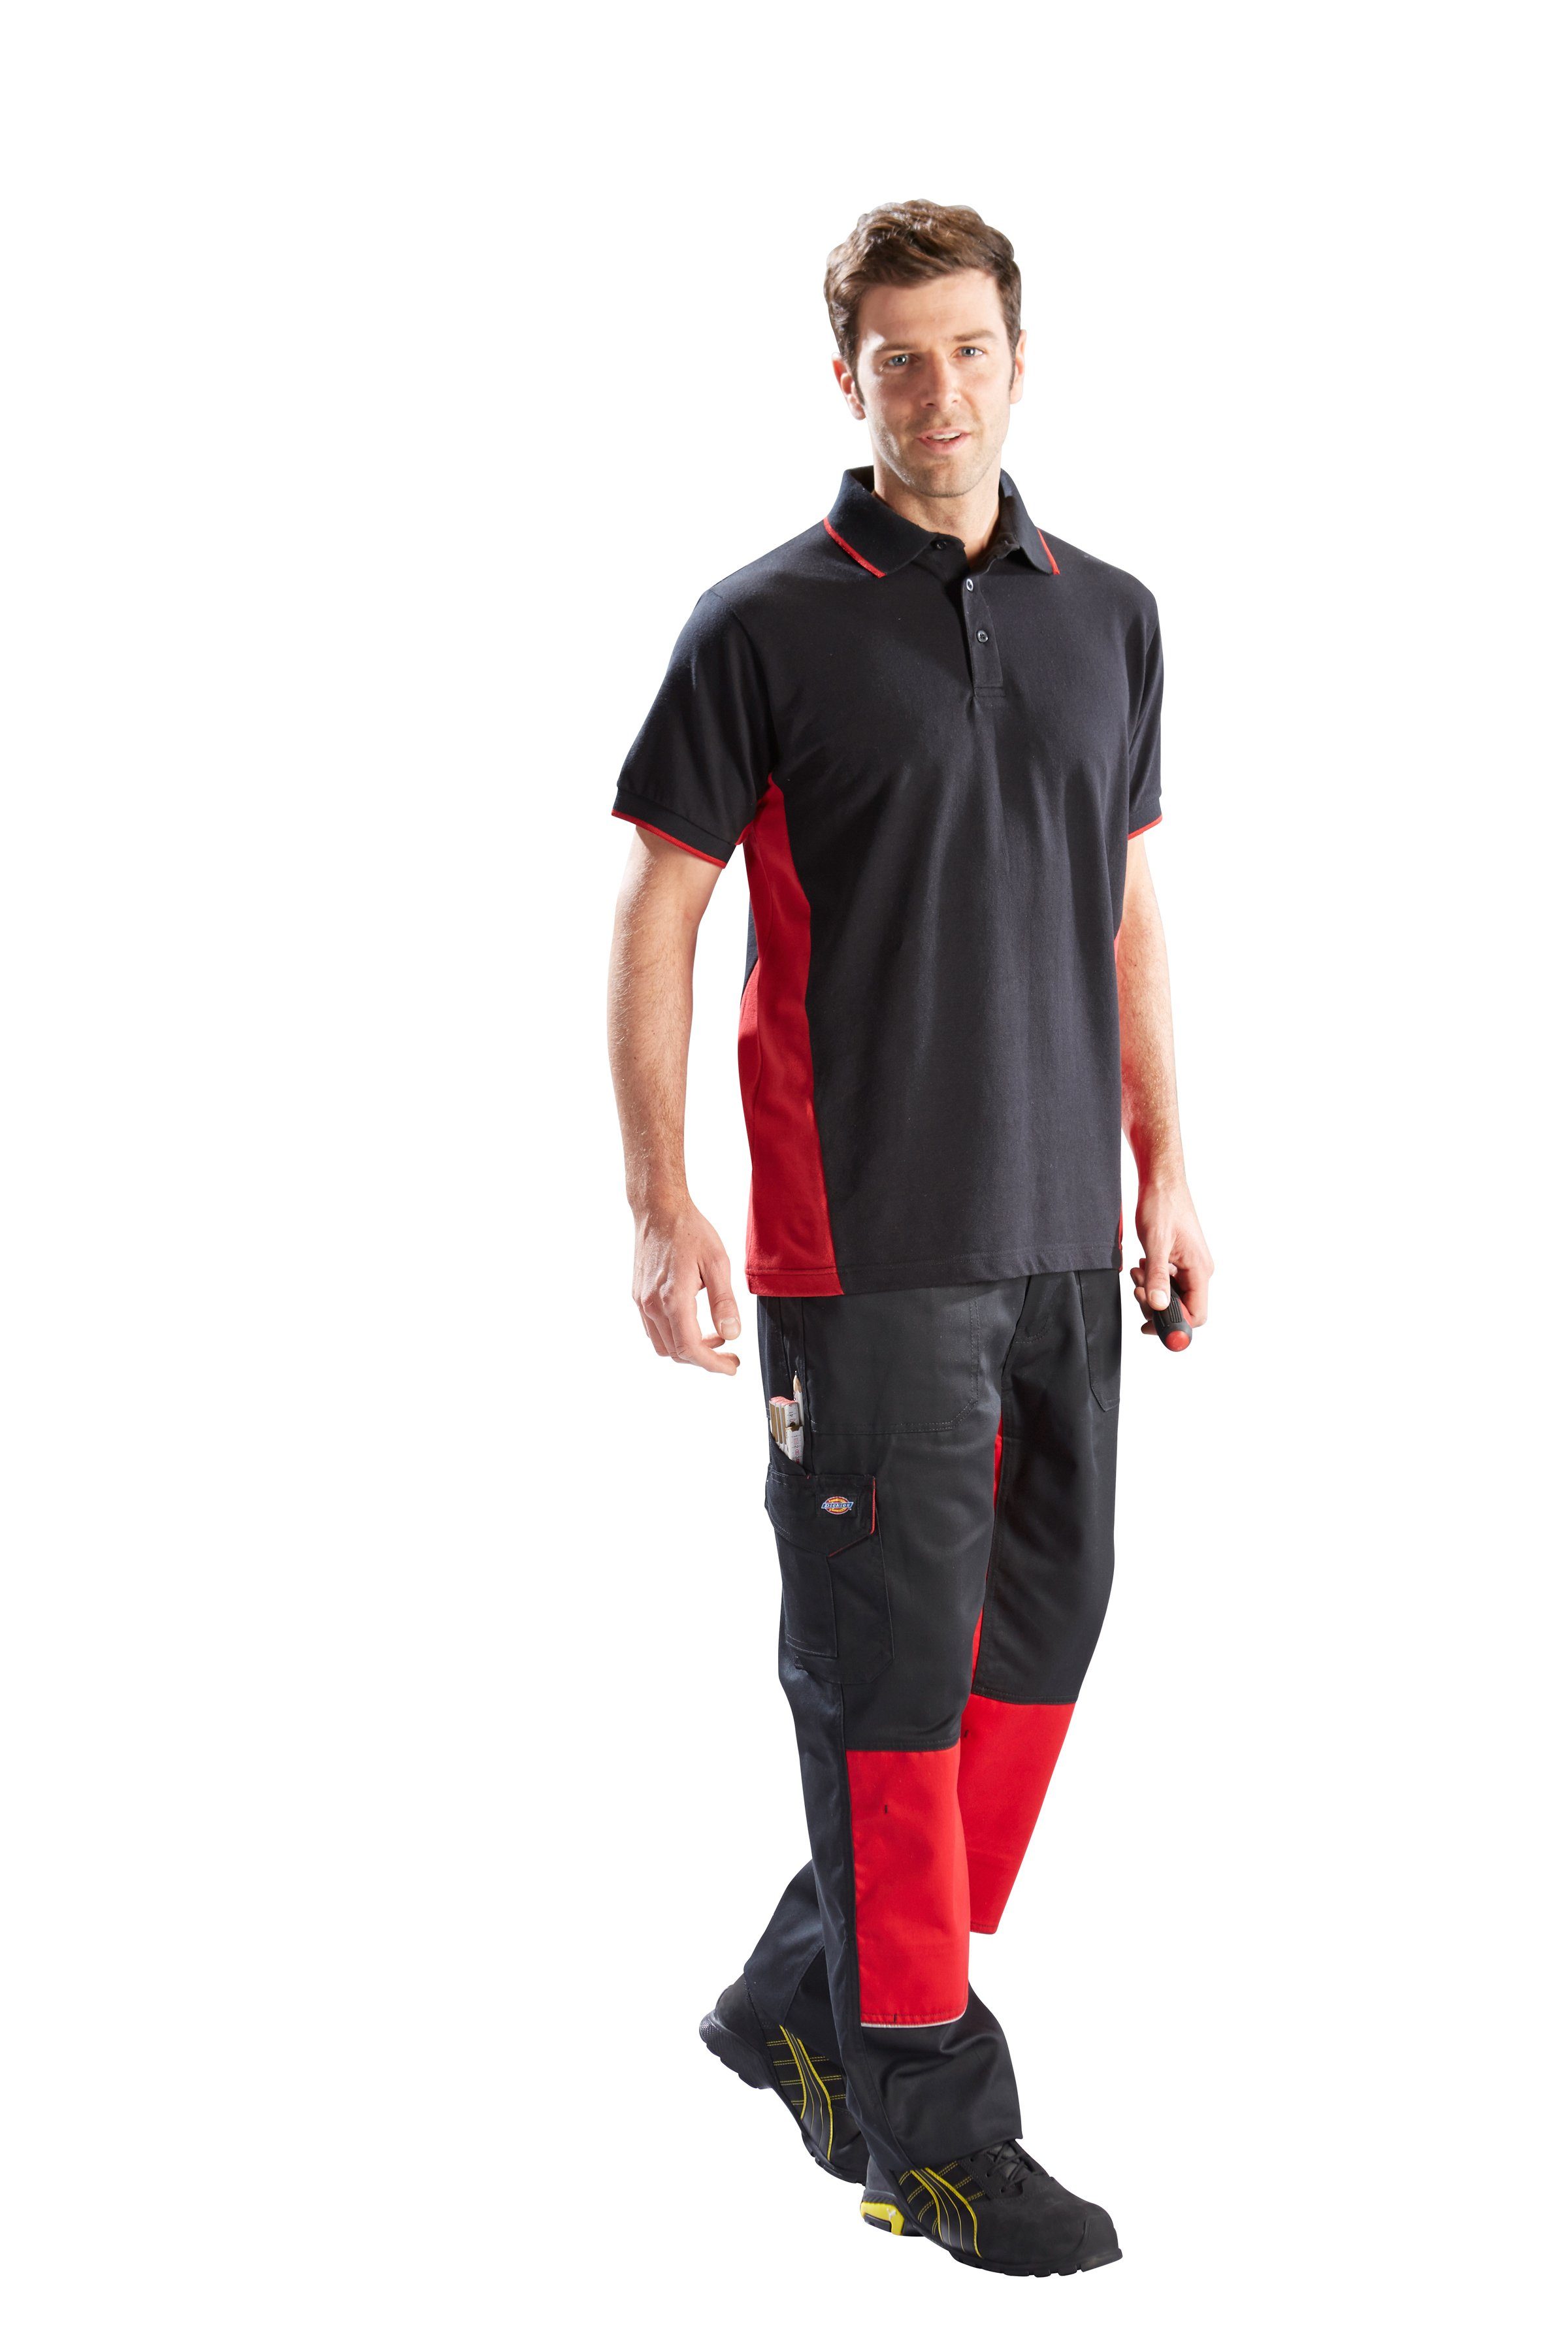 Baumwolle % Poloshirt rot-schwarz 100 Dickies